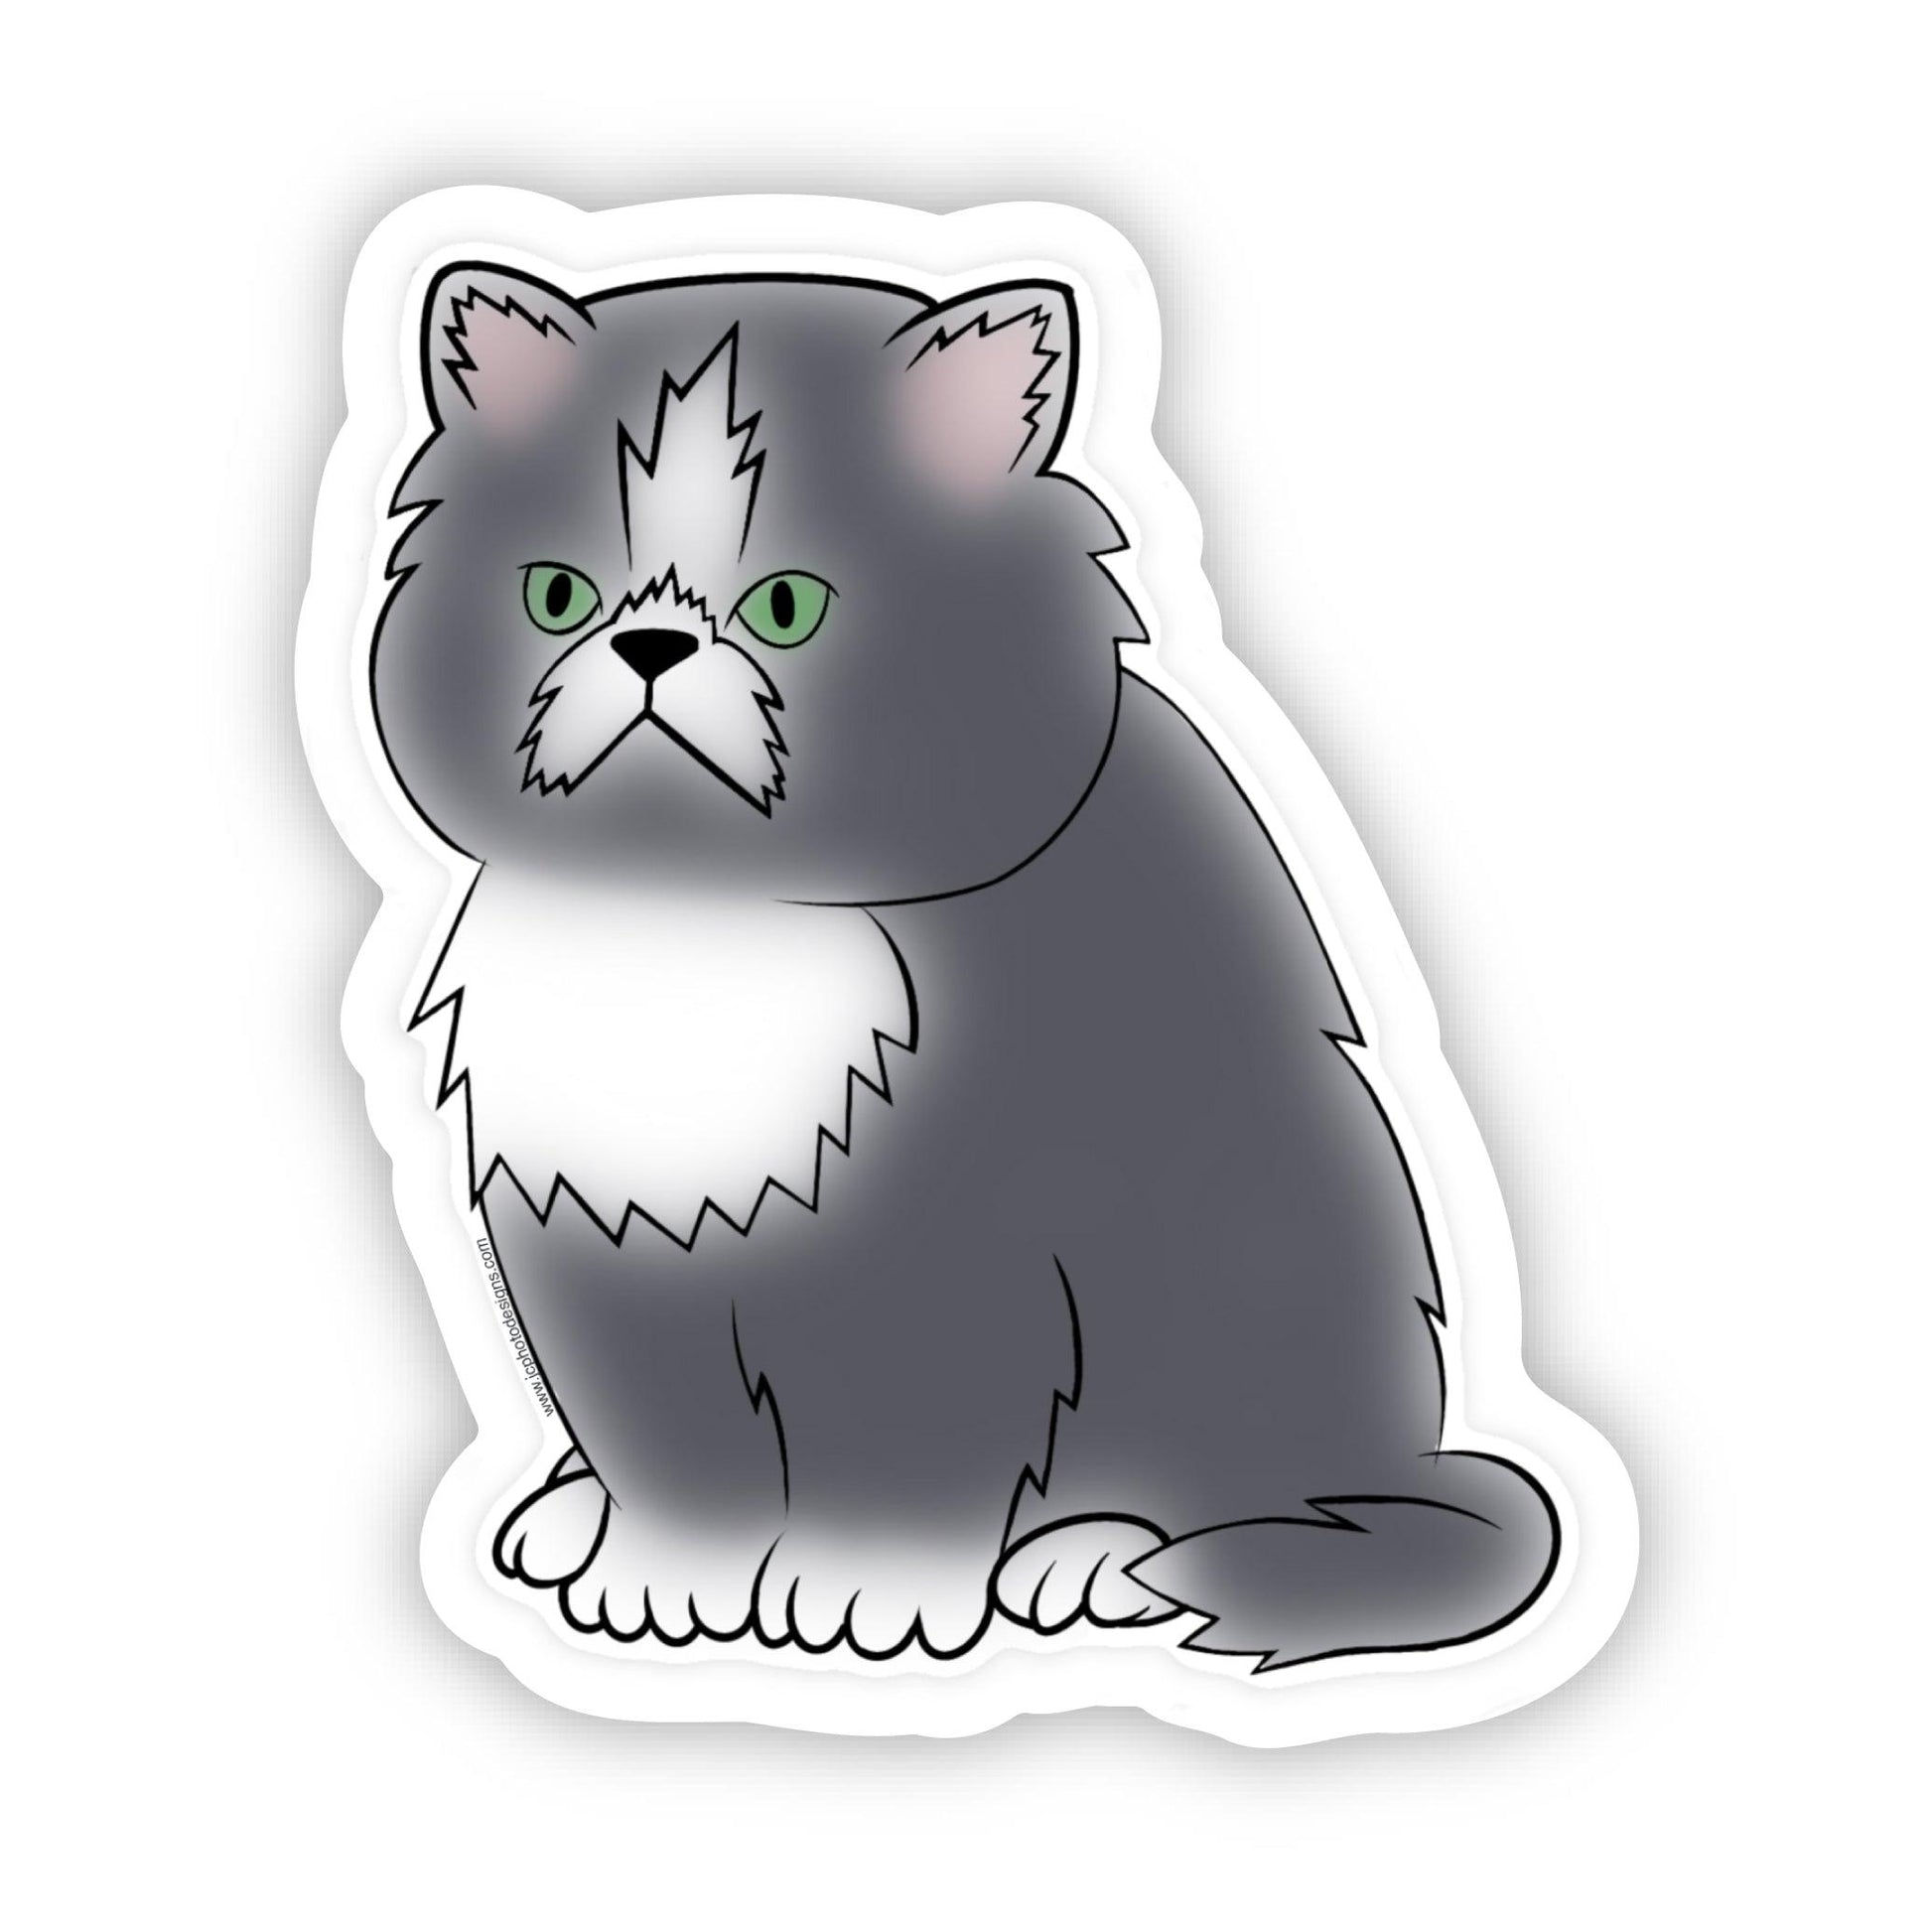 Regal Persian Cat Sticker - Lush-Furred Feline with Green Eyes Sticker - JC Designs